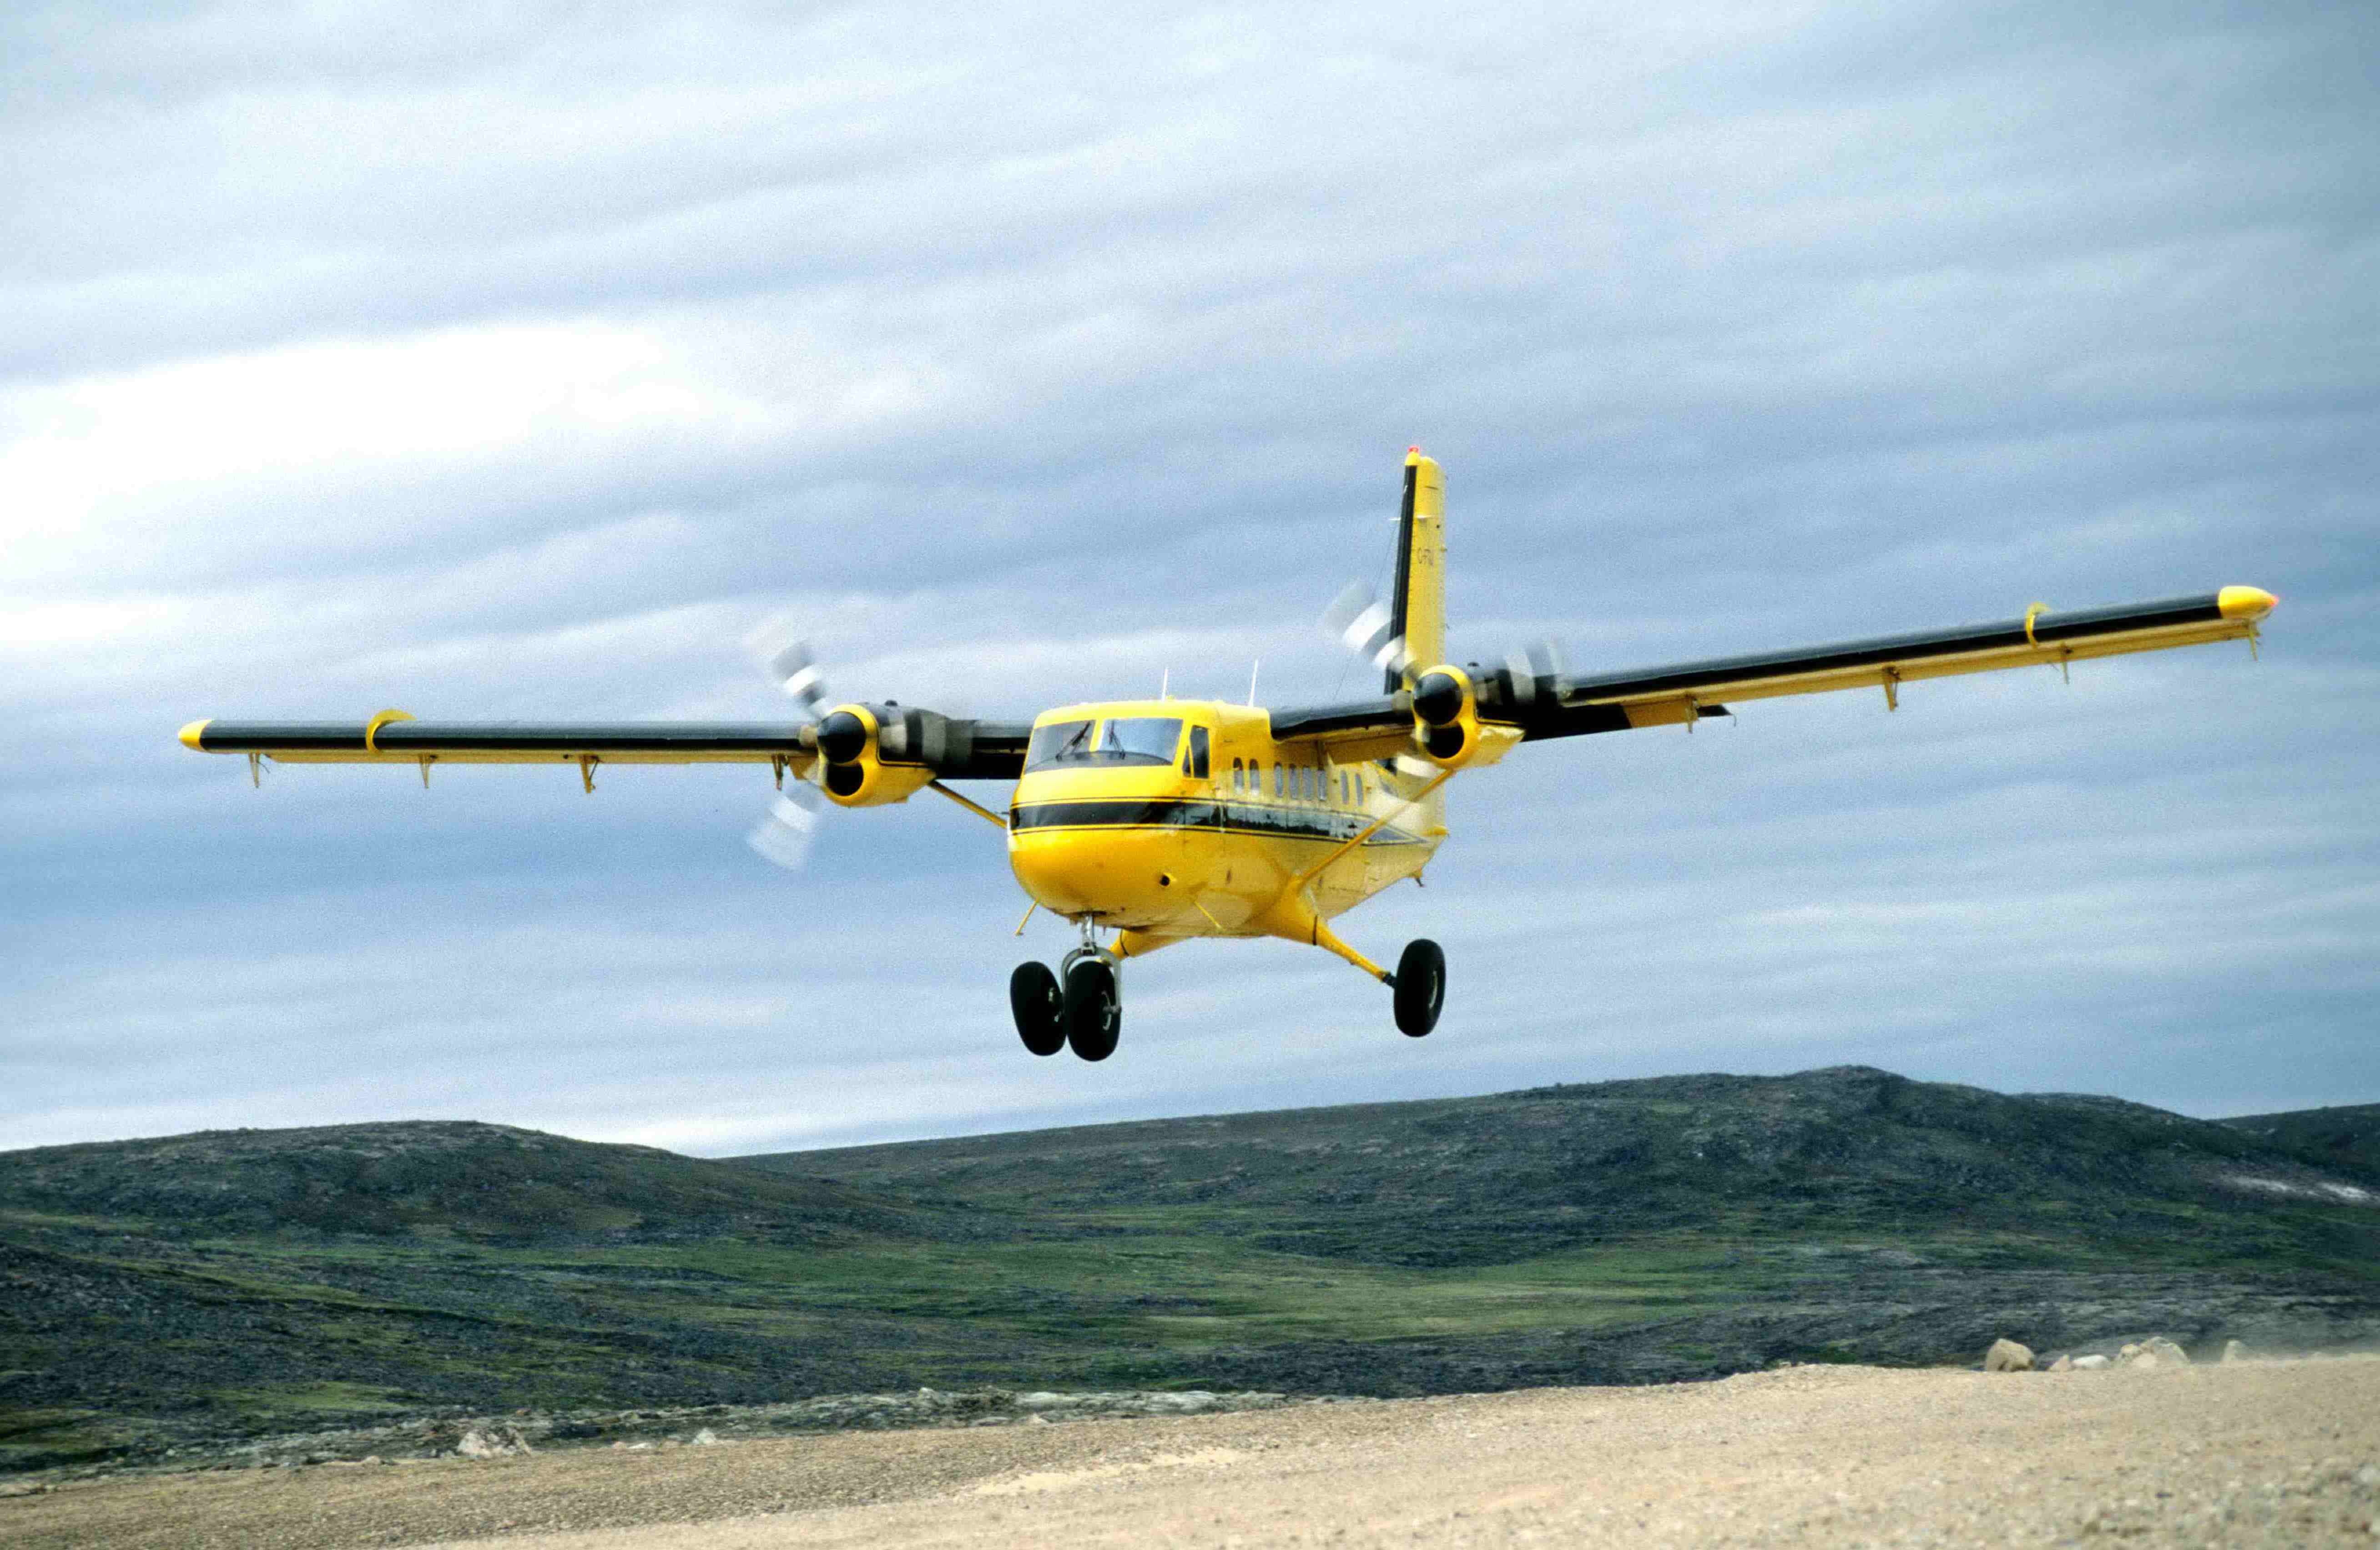 De Havilland Canada DHC-6 Twin Otter next